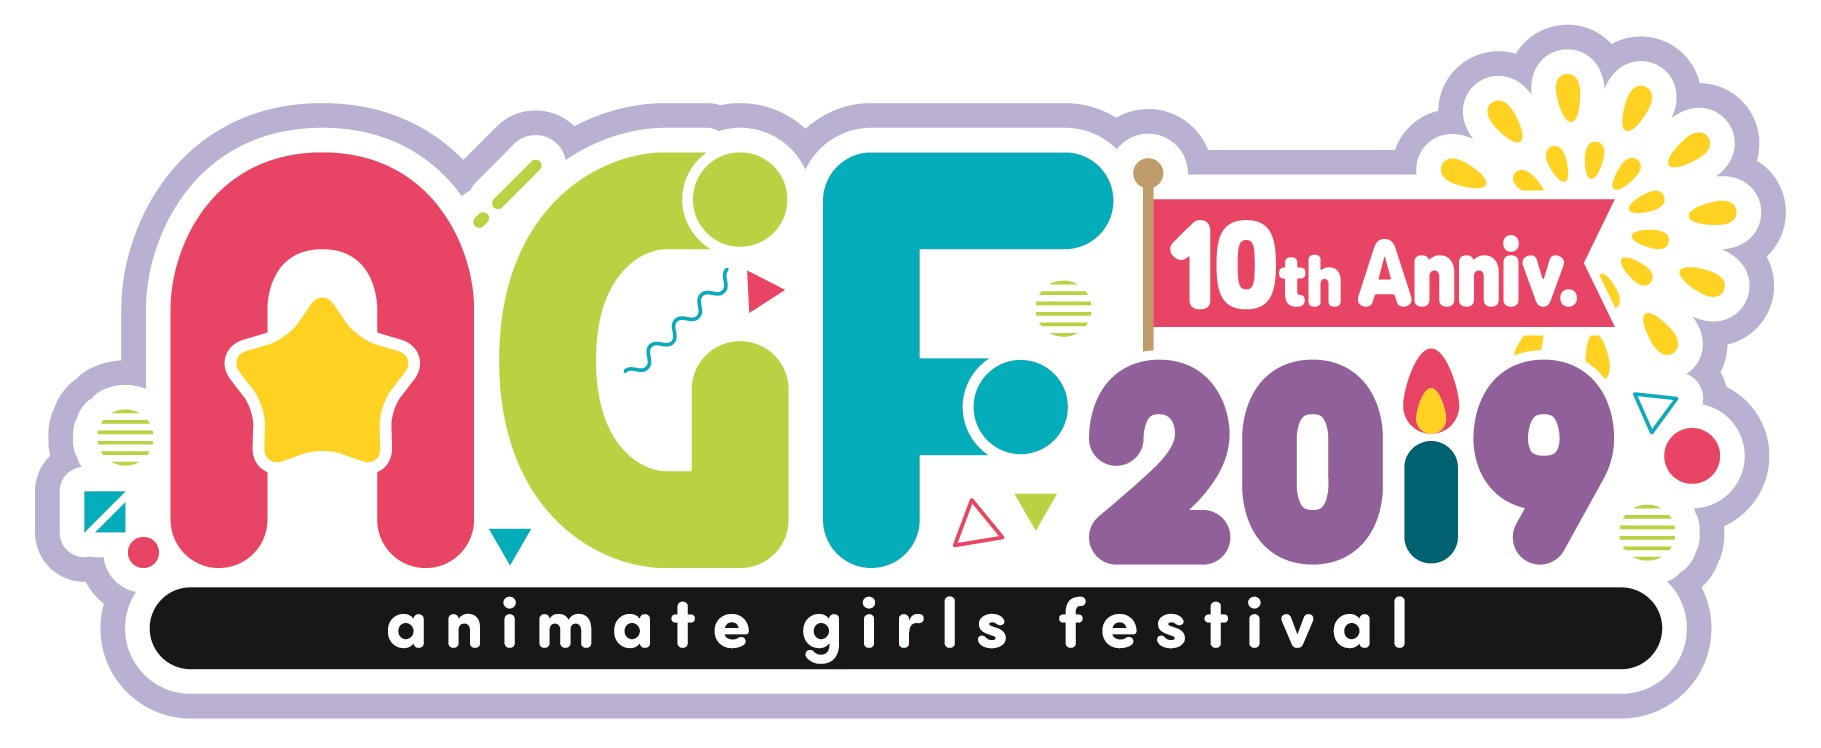 AGF2017_logo_guideline_olcs3